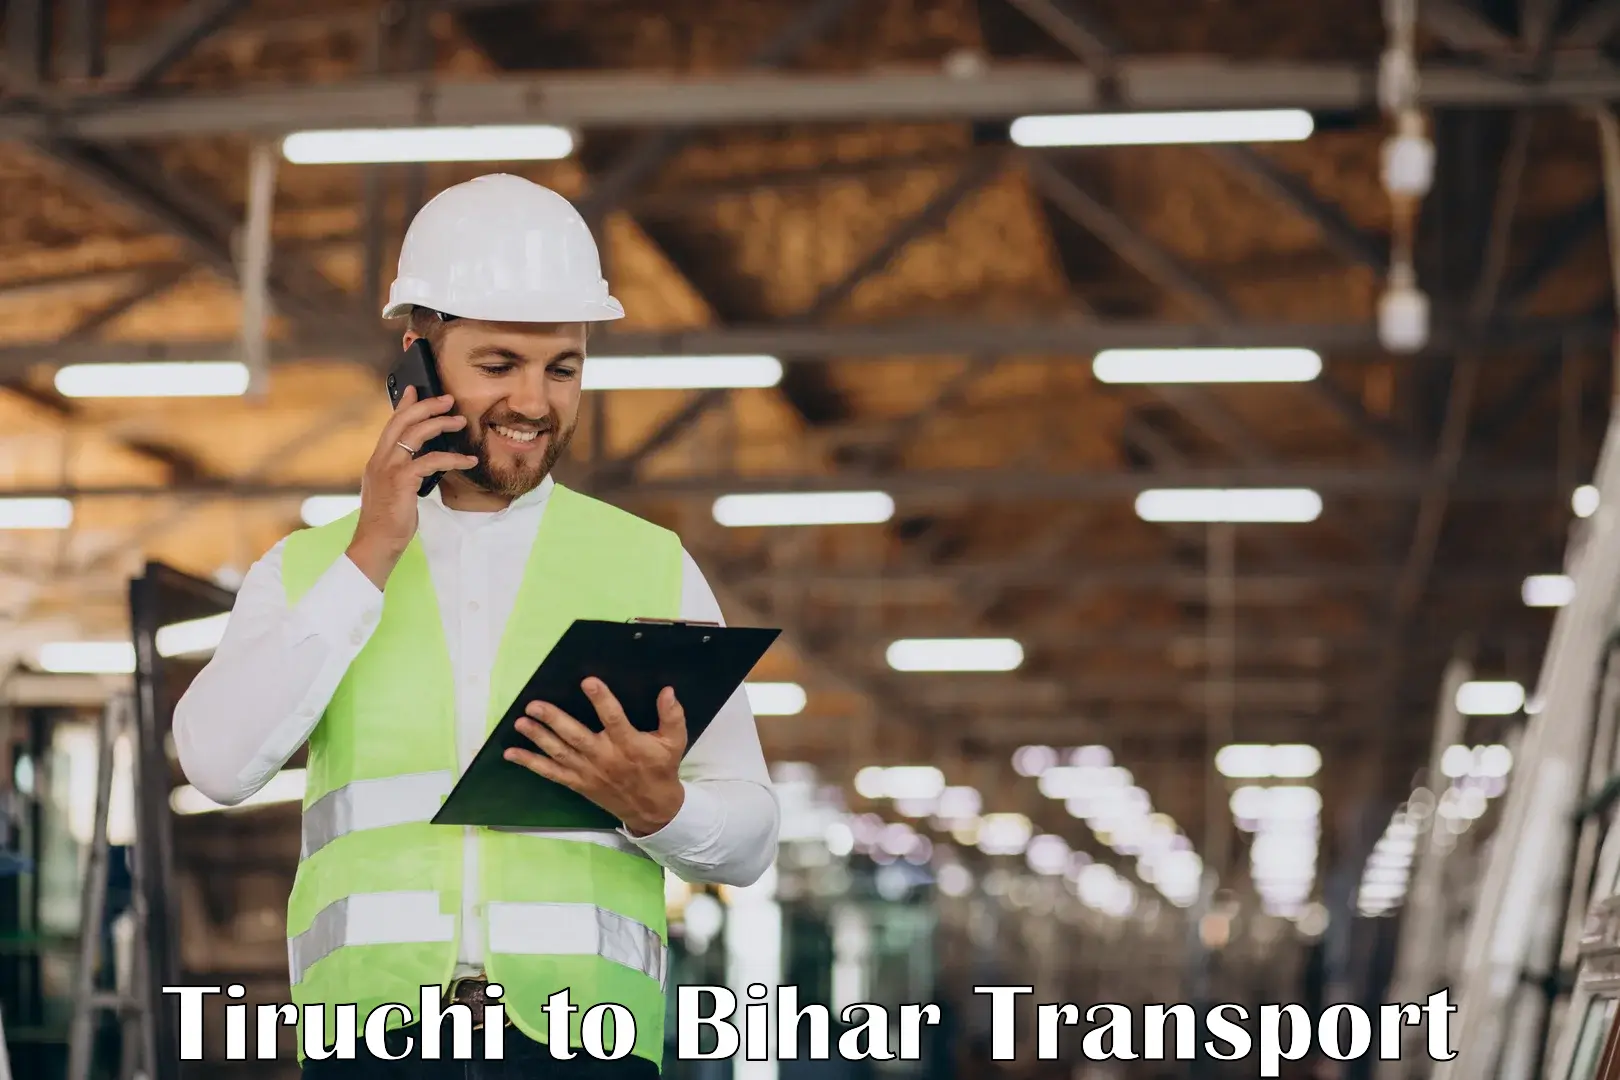 Daily transport service Tiruchi to Bihar